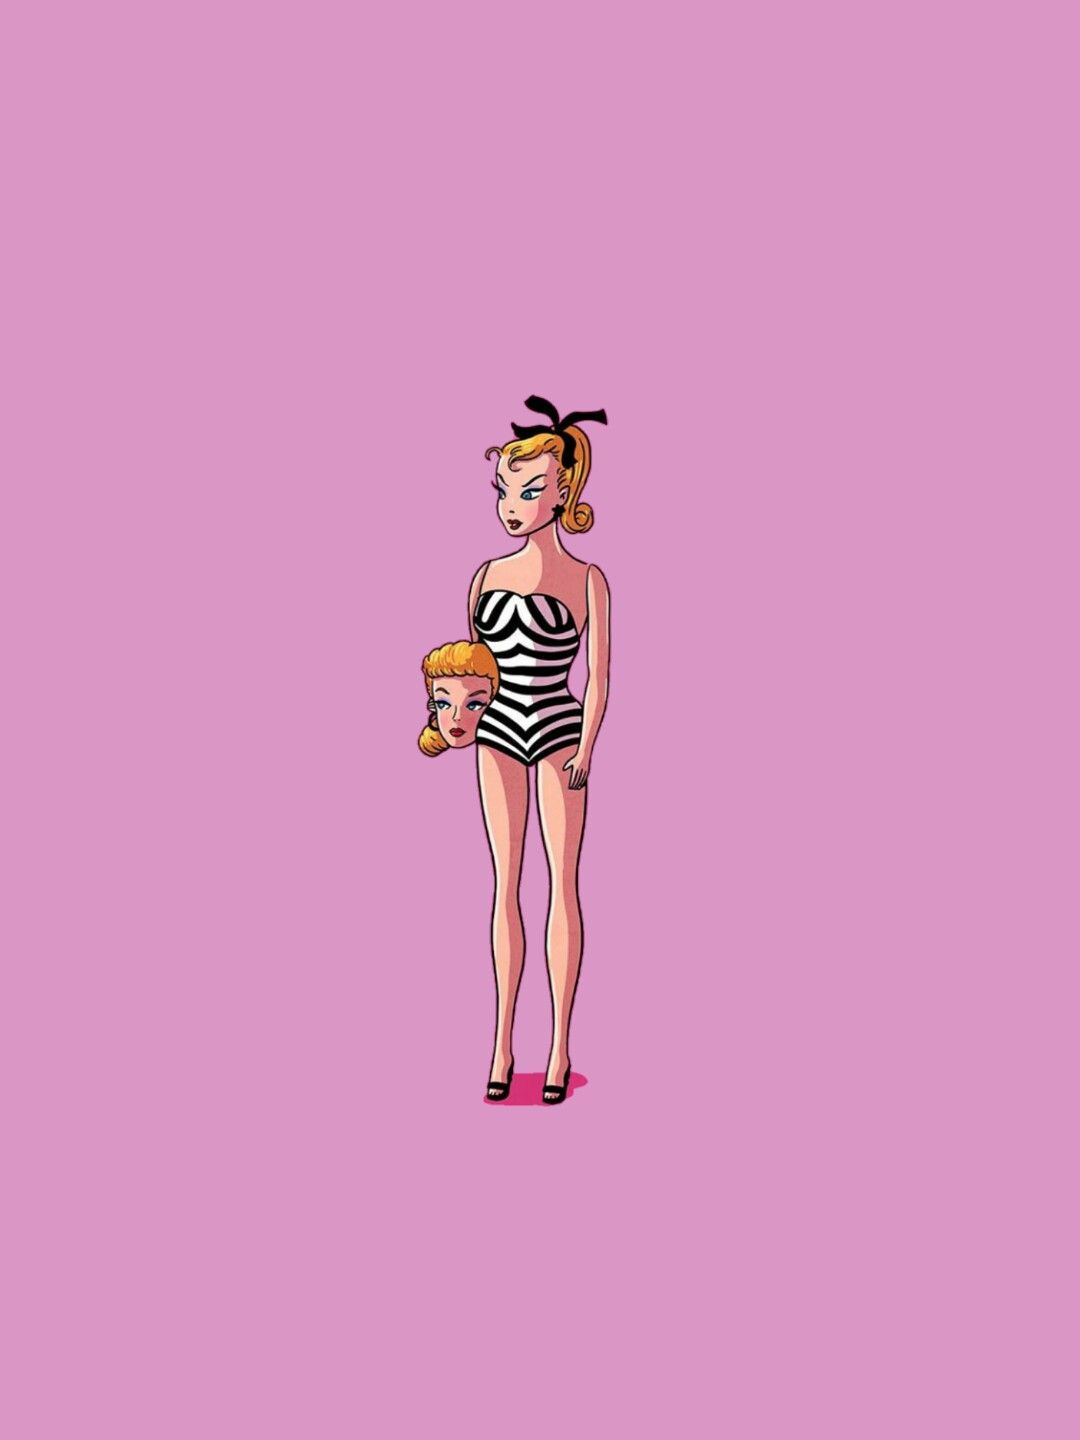 Tumblr aesthetics minimalist wallpaper barbie #wallpaper #barbie #tumblr # aesthetic. Barbie, Wallpaper, Phone wallpaper